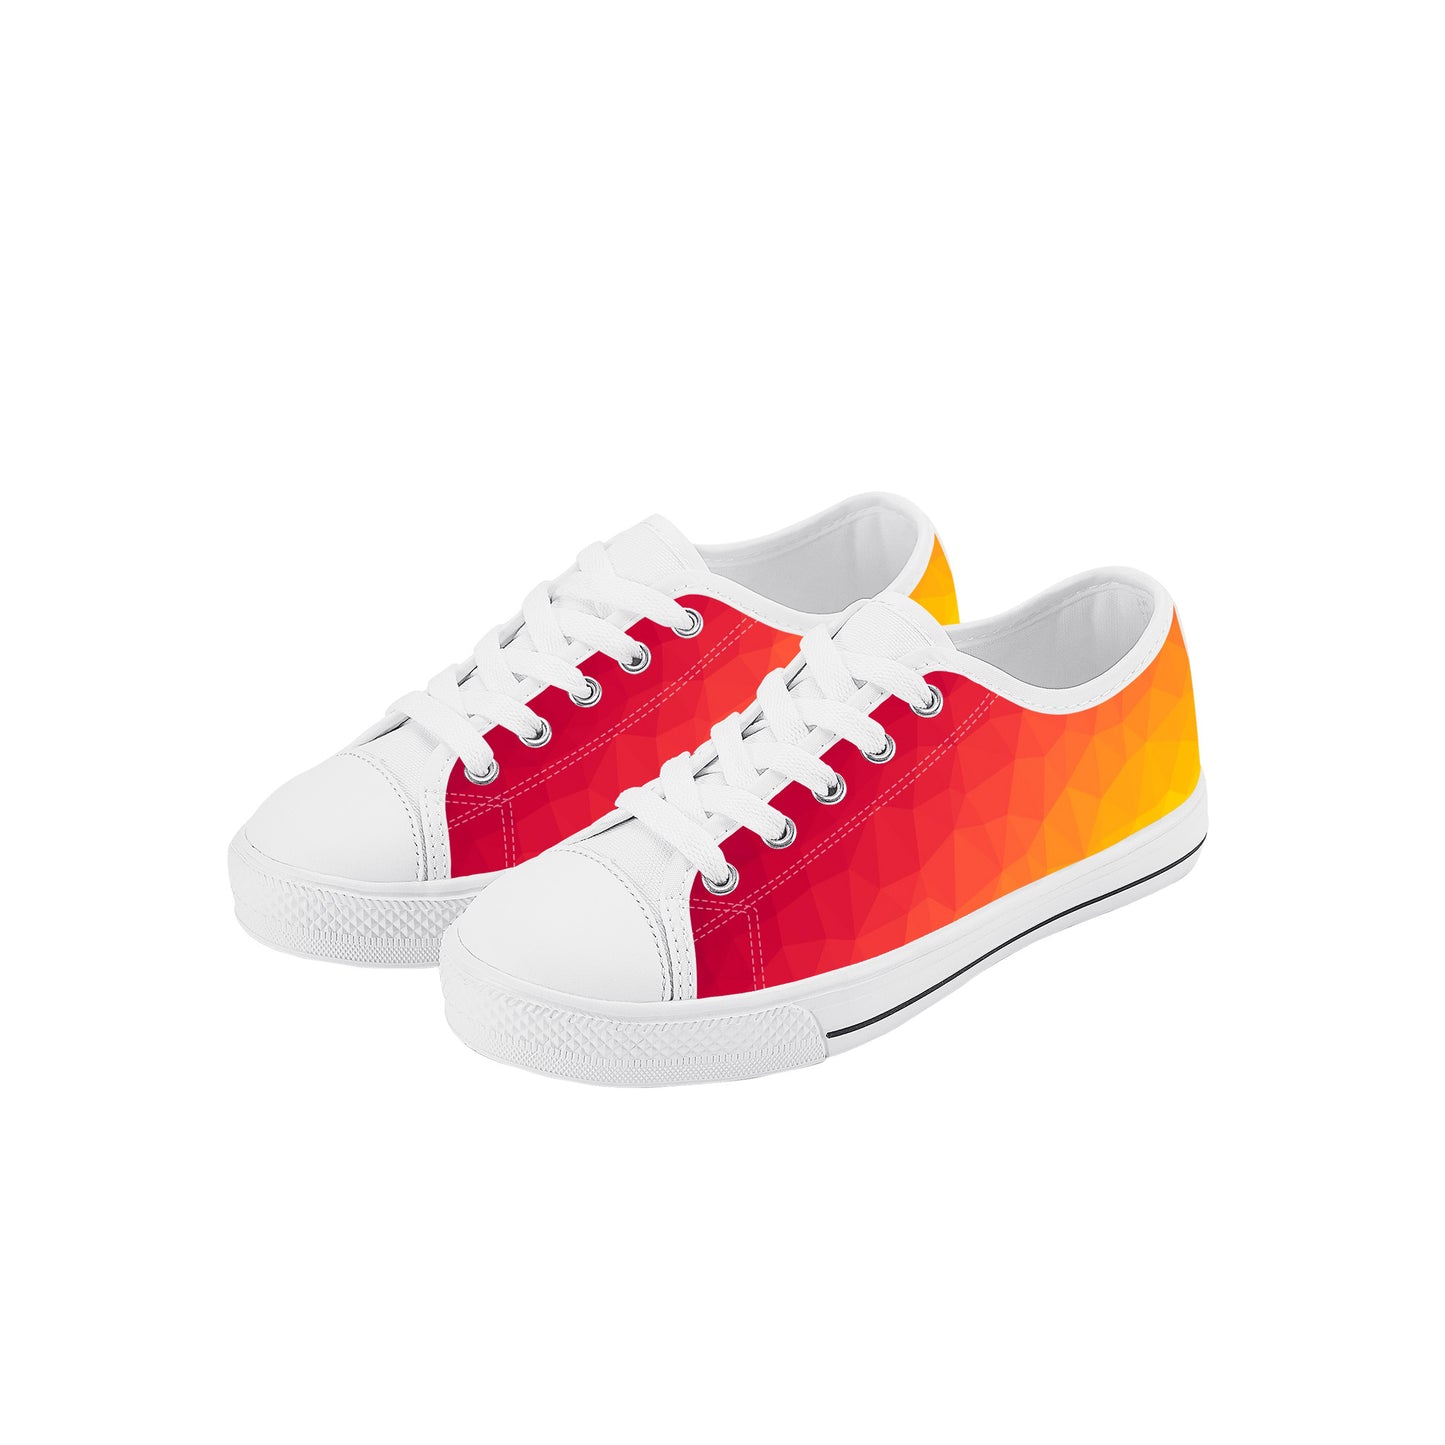 Kids Low Top Canvas Sneakers - Orange/Red